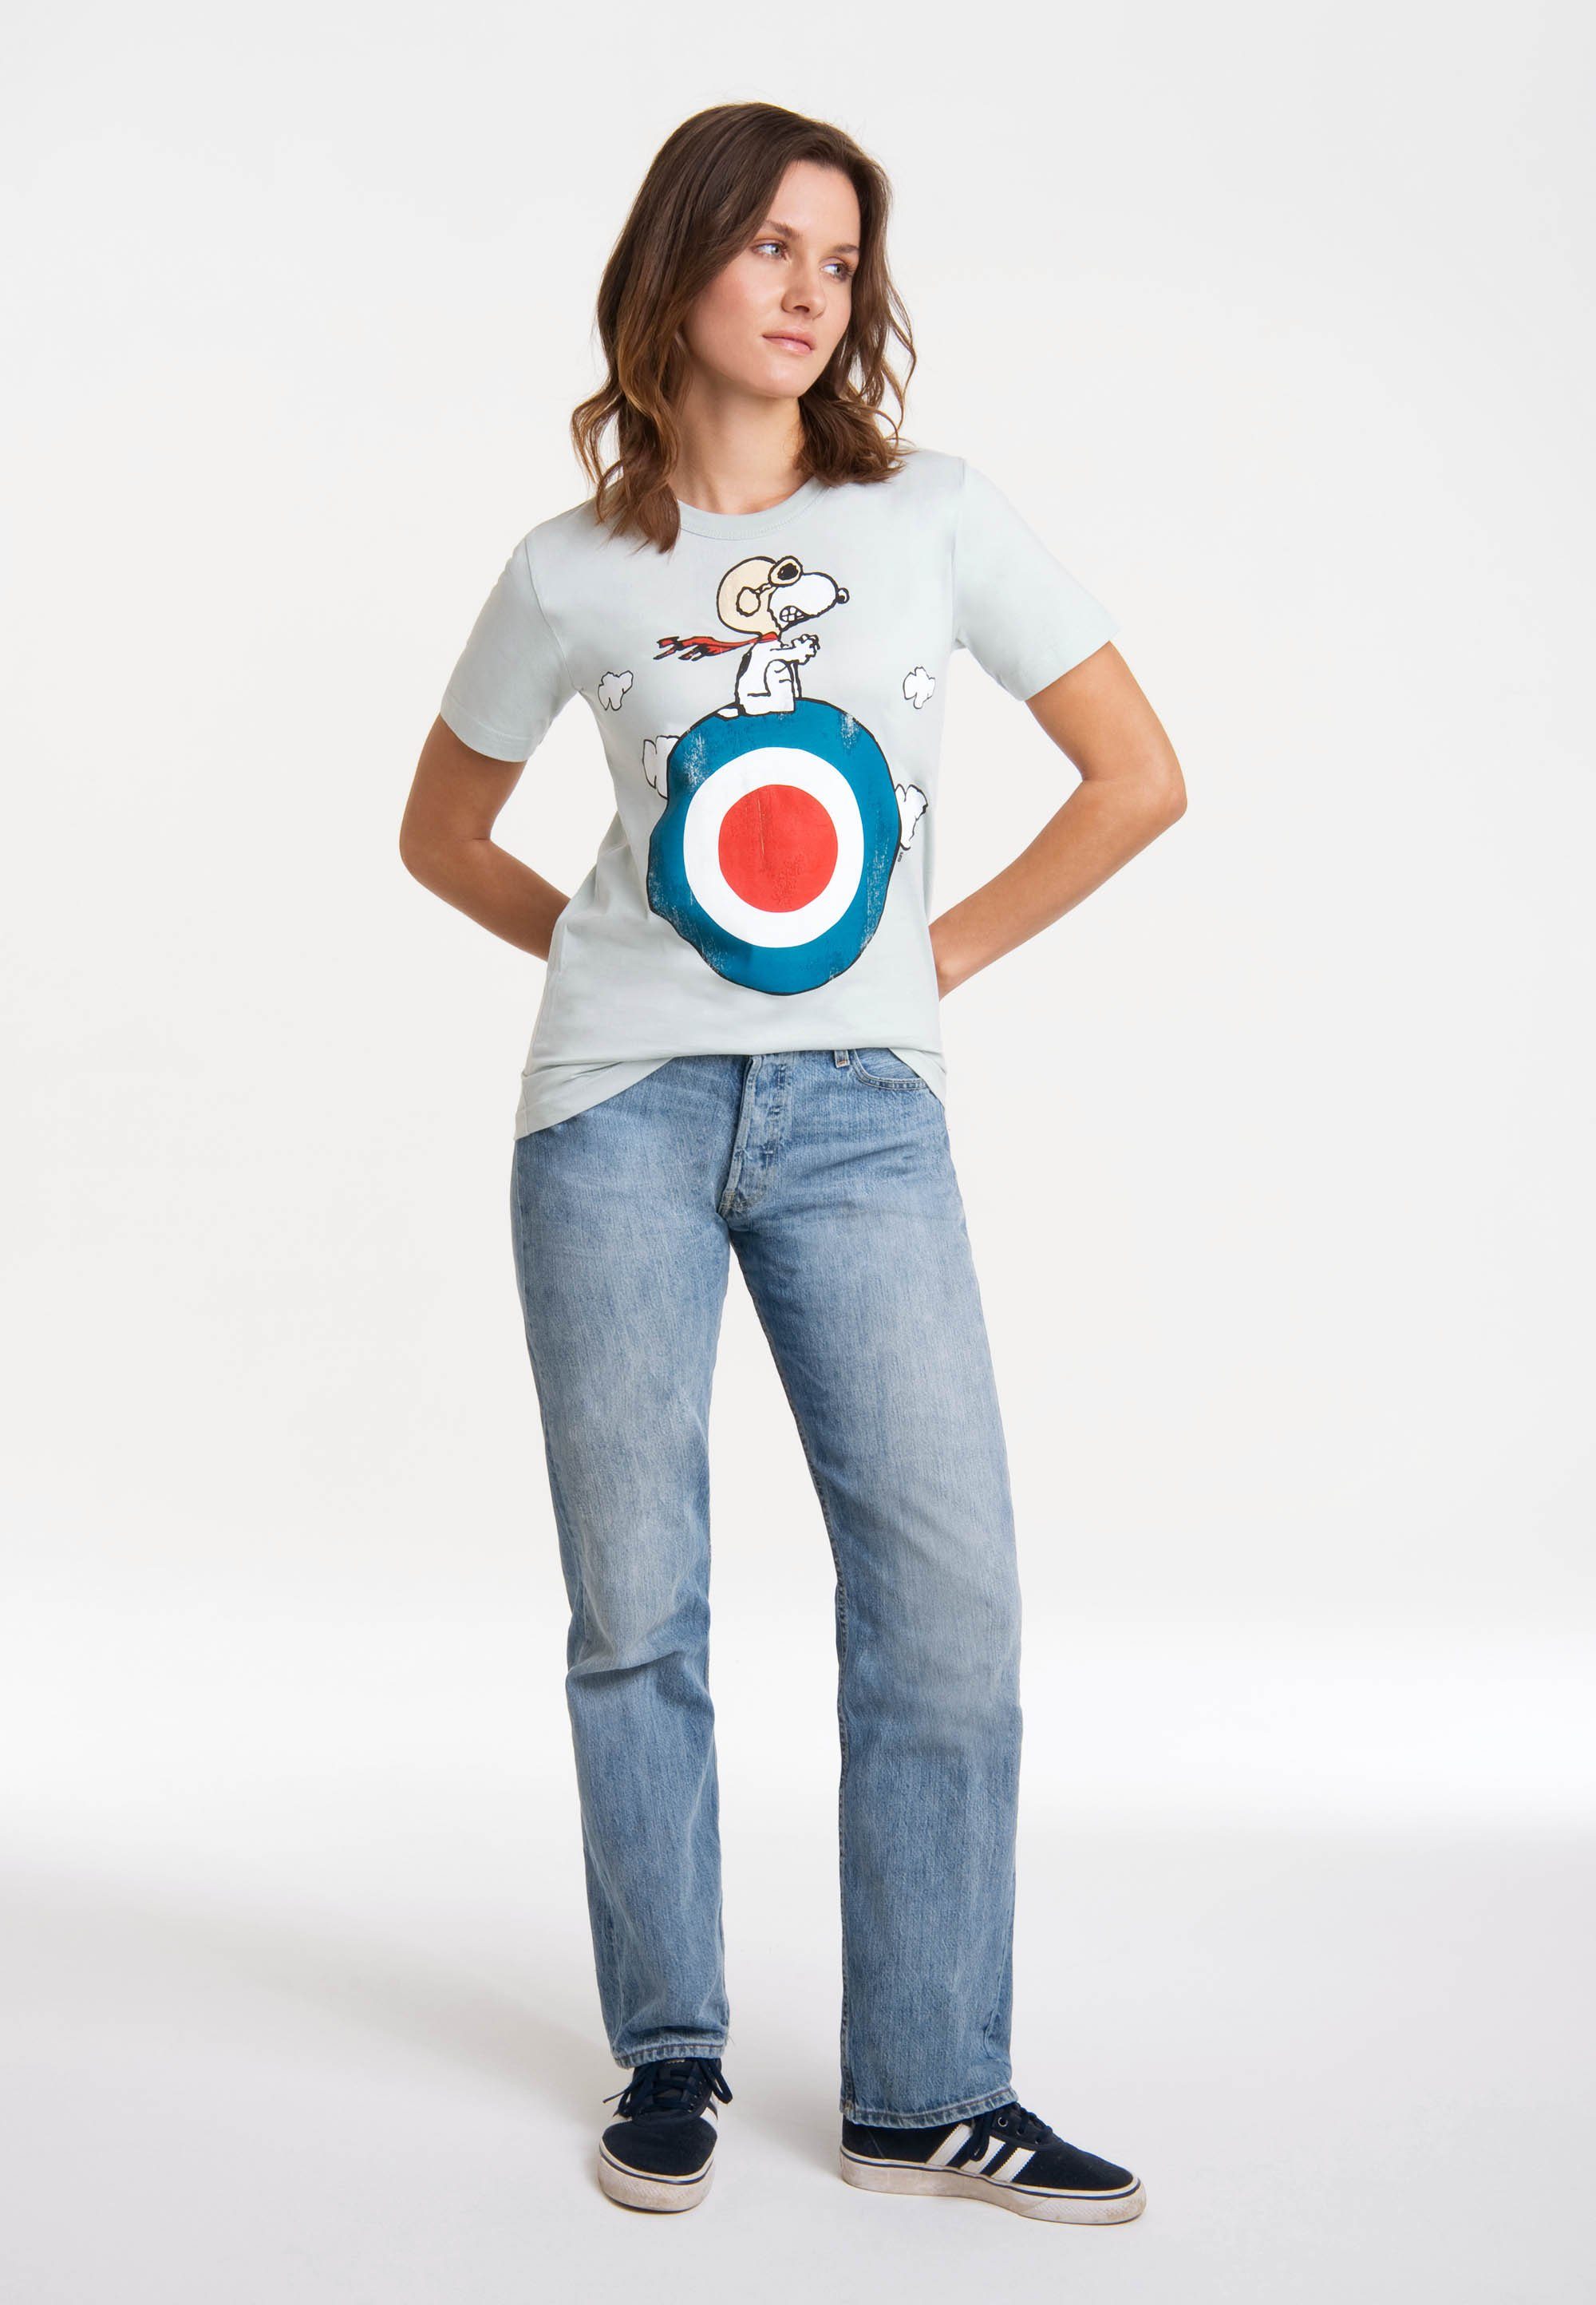 T-Shirt Peanuts - Print mit Snoopy LOGOSHIRT blau lizenziertem